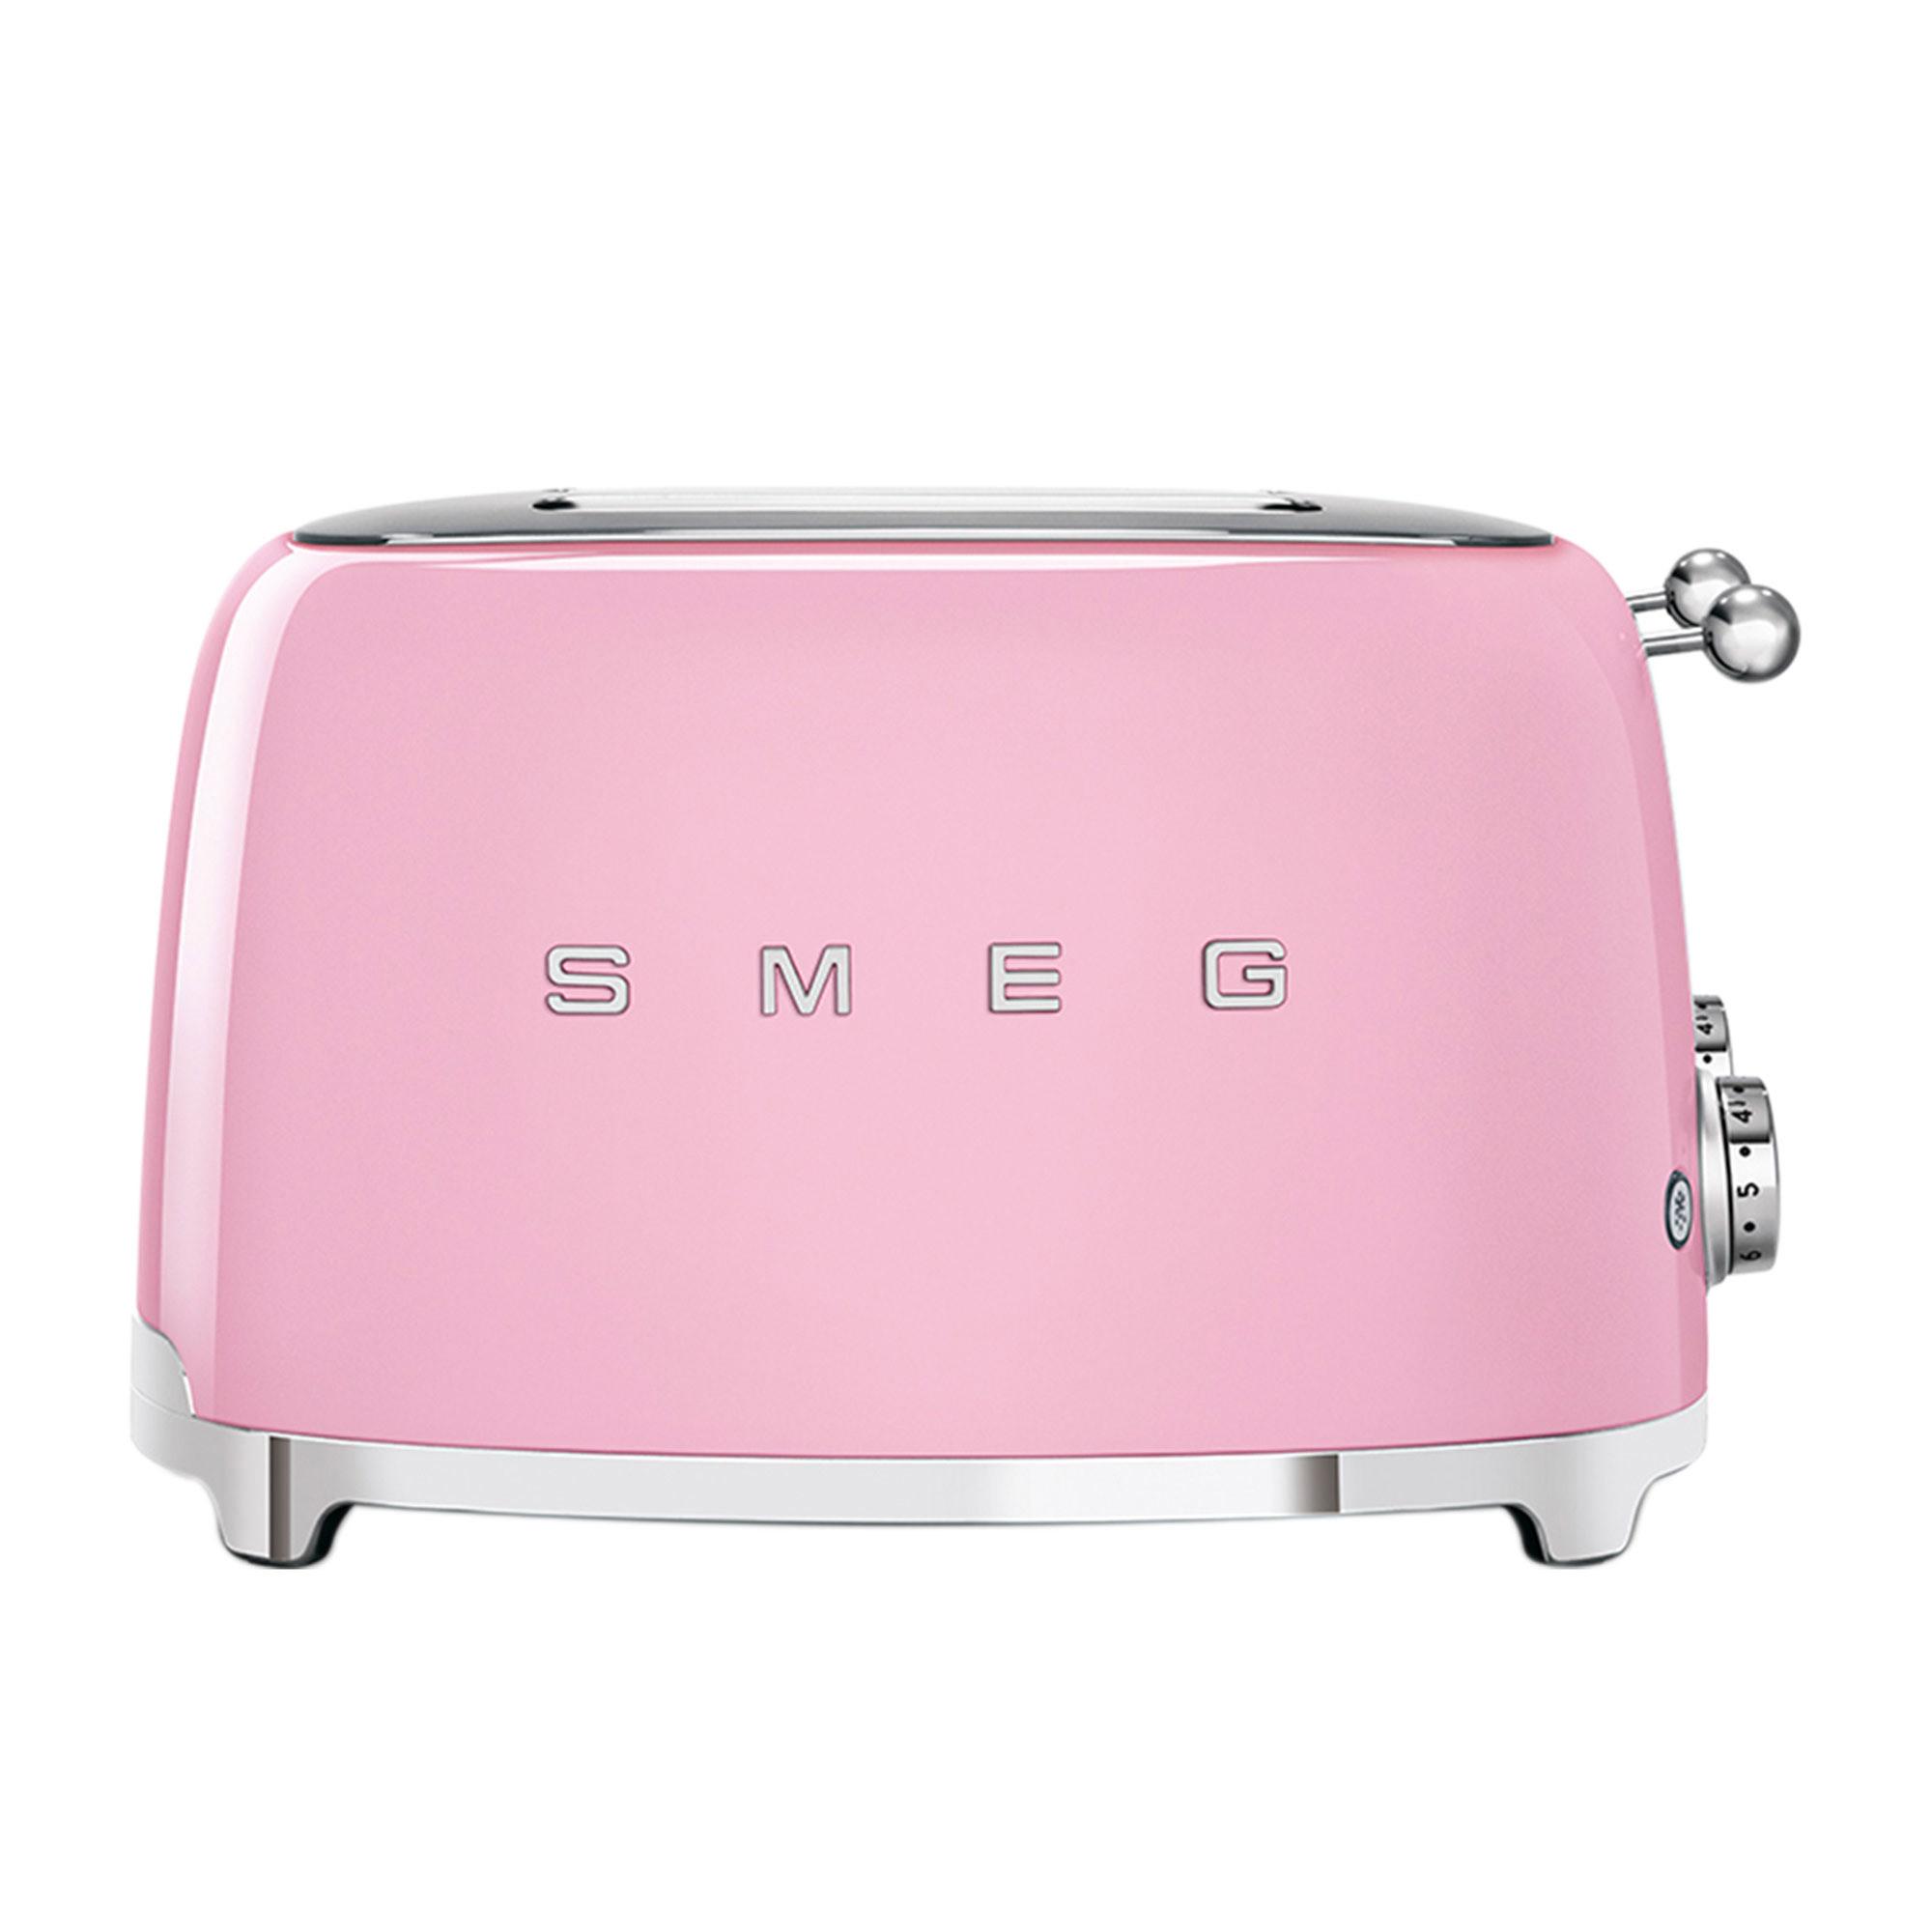 Smeg 50's Retro Style 4 Slot Toaster Pink Image 4